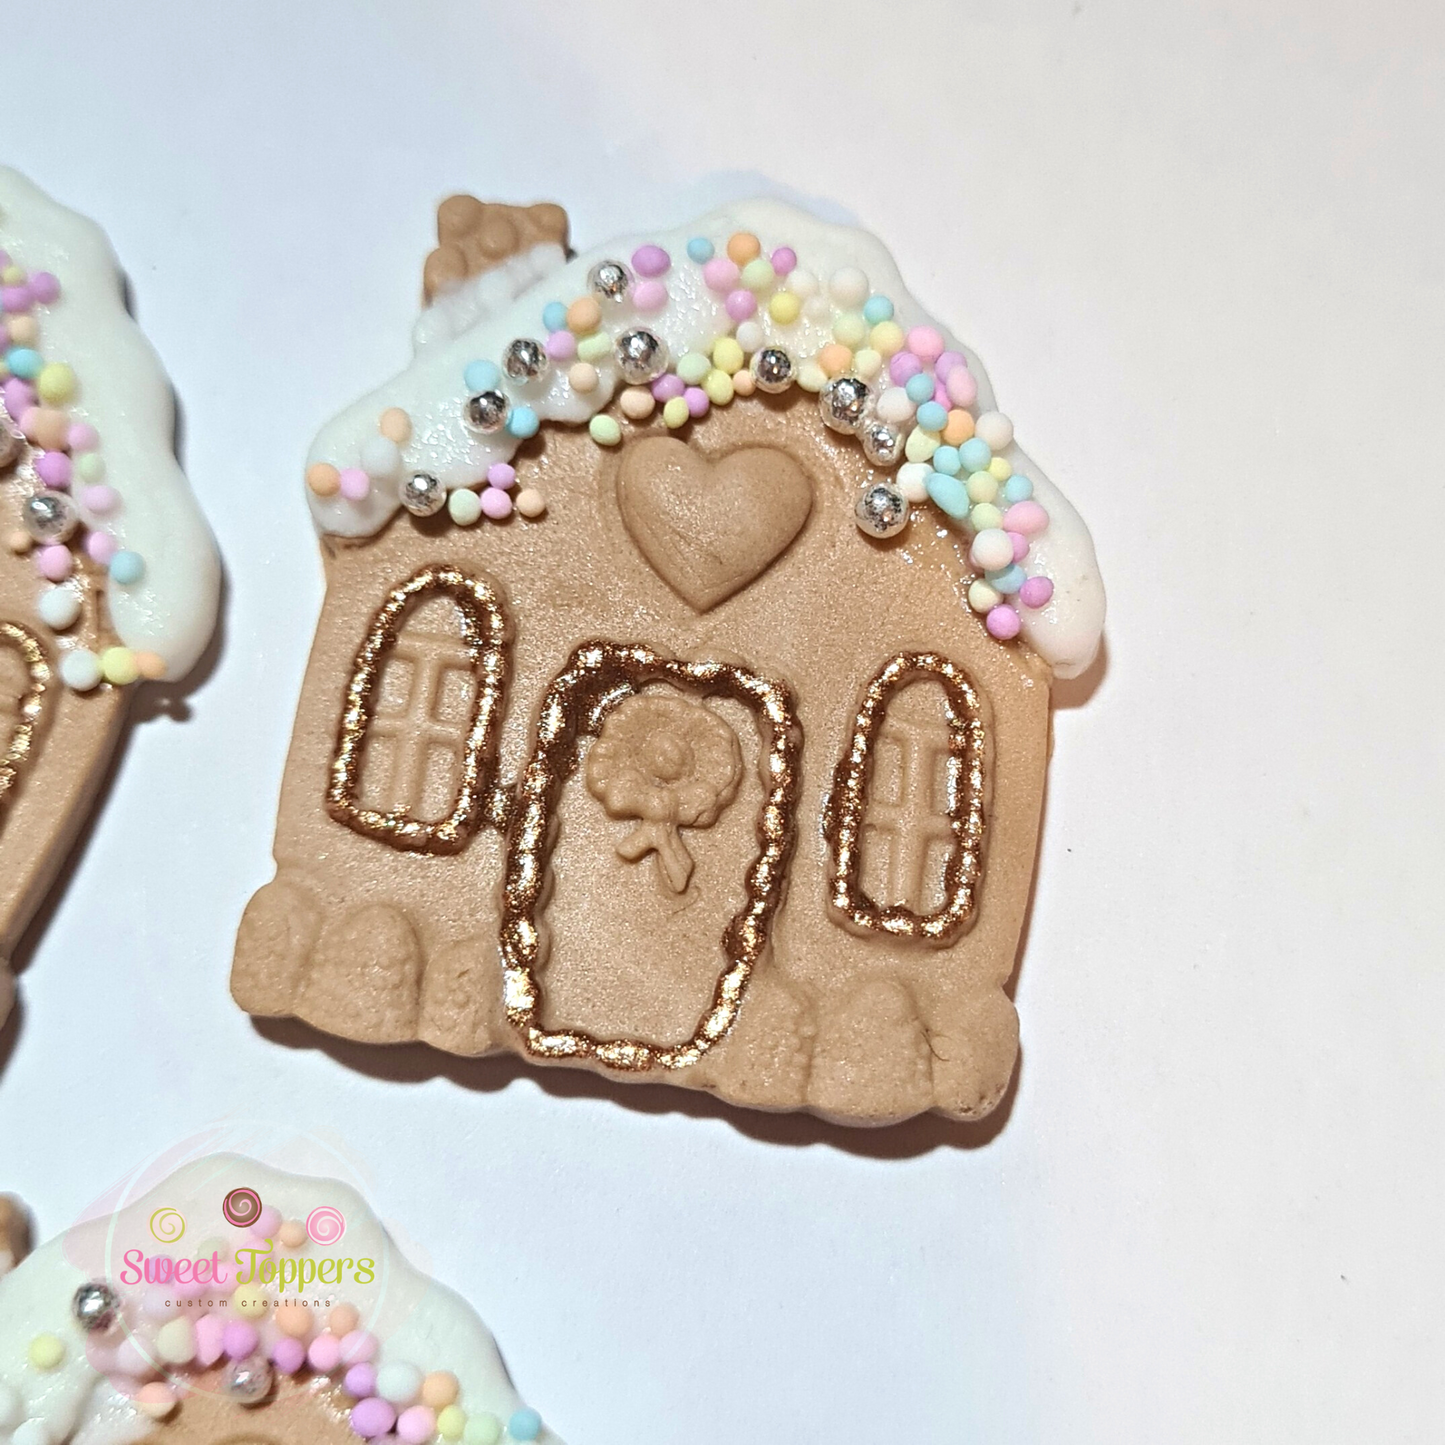 Mini Fondant Gingerbread houses (12)